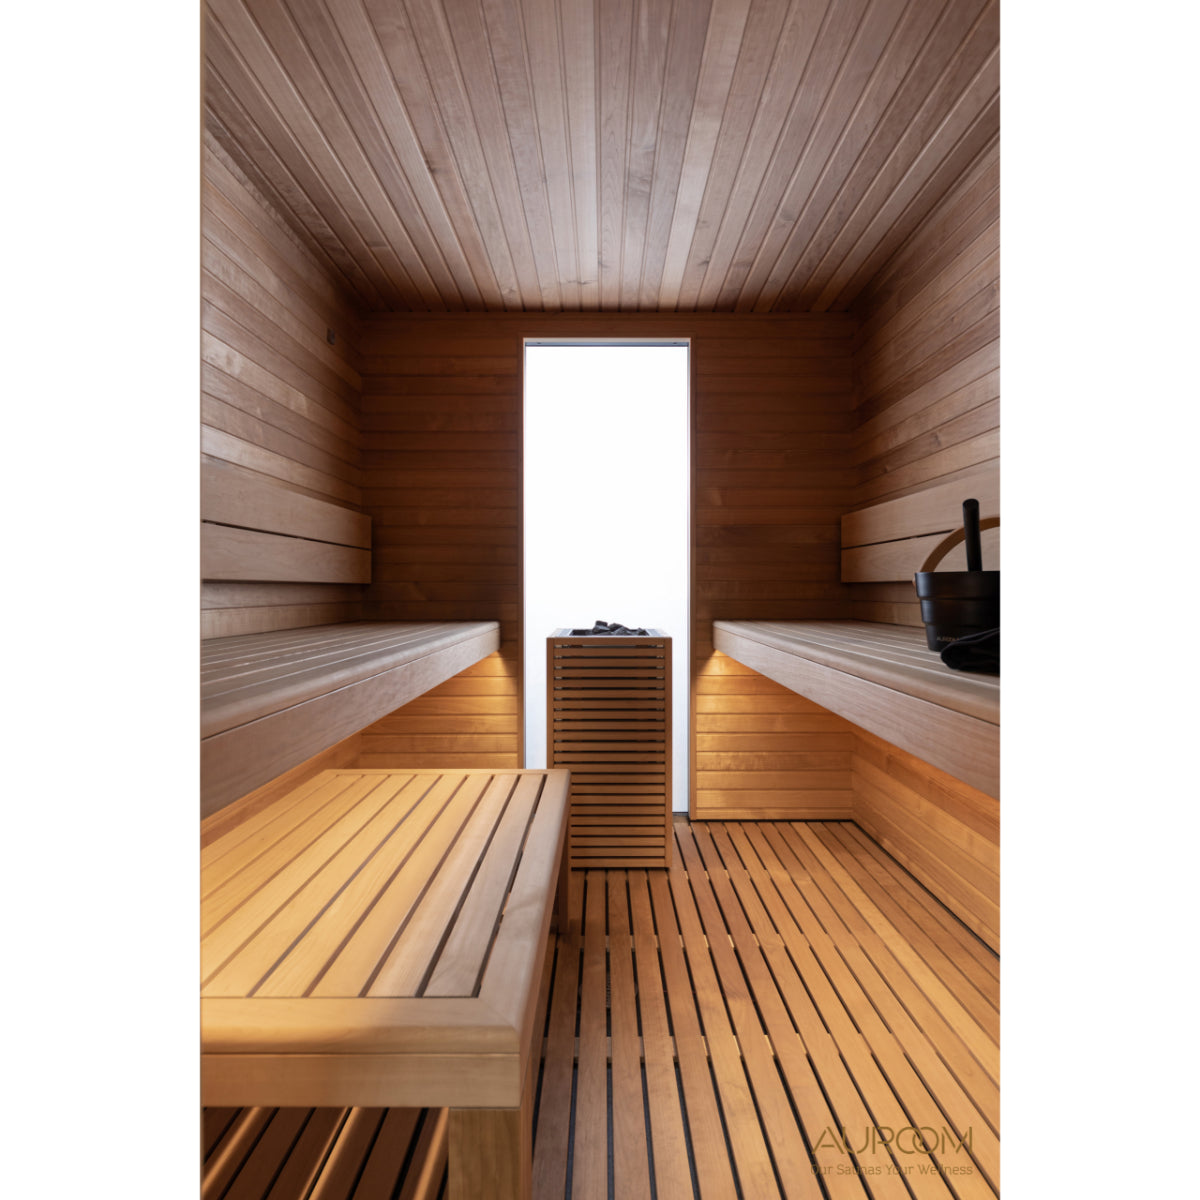 Auroom Garda Wood Outdoor Modular Cabin Sauna Kit, 6 person - Upper Livin